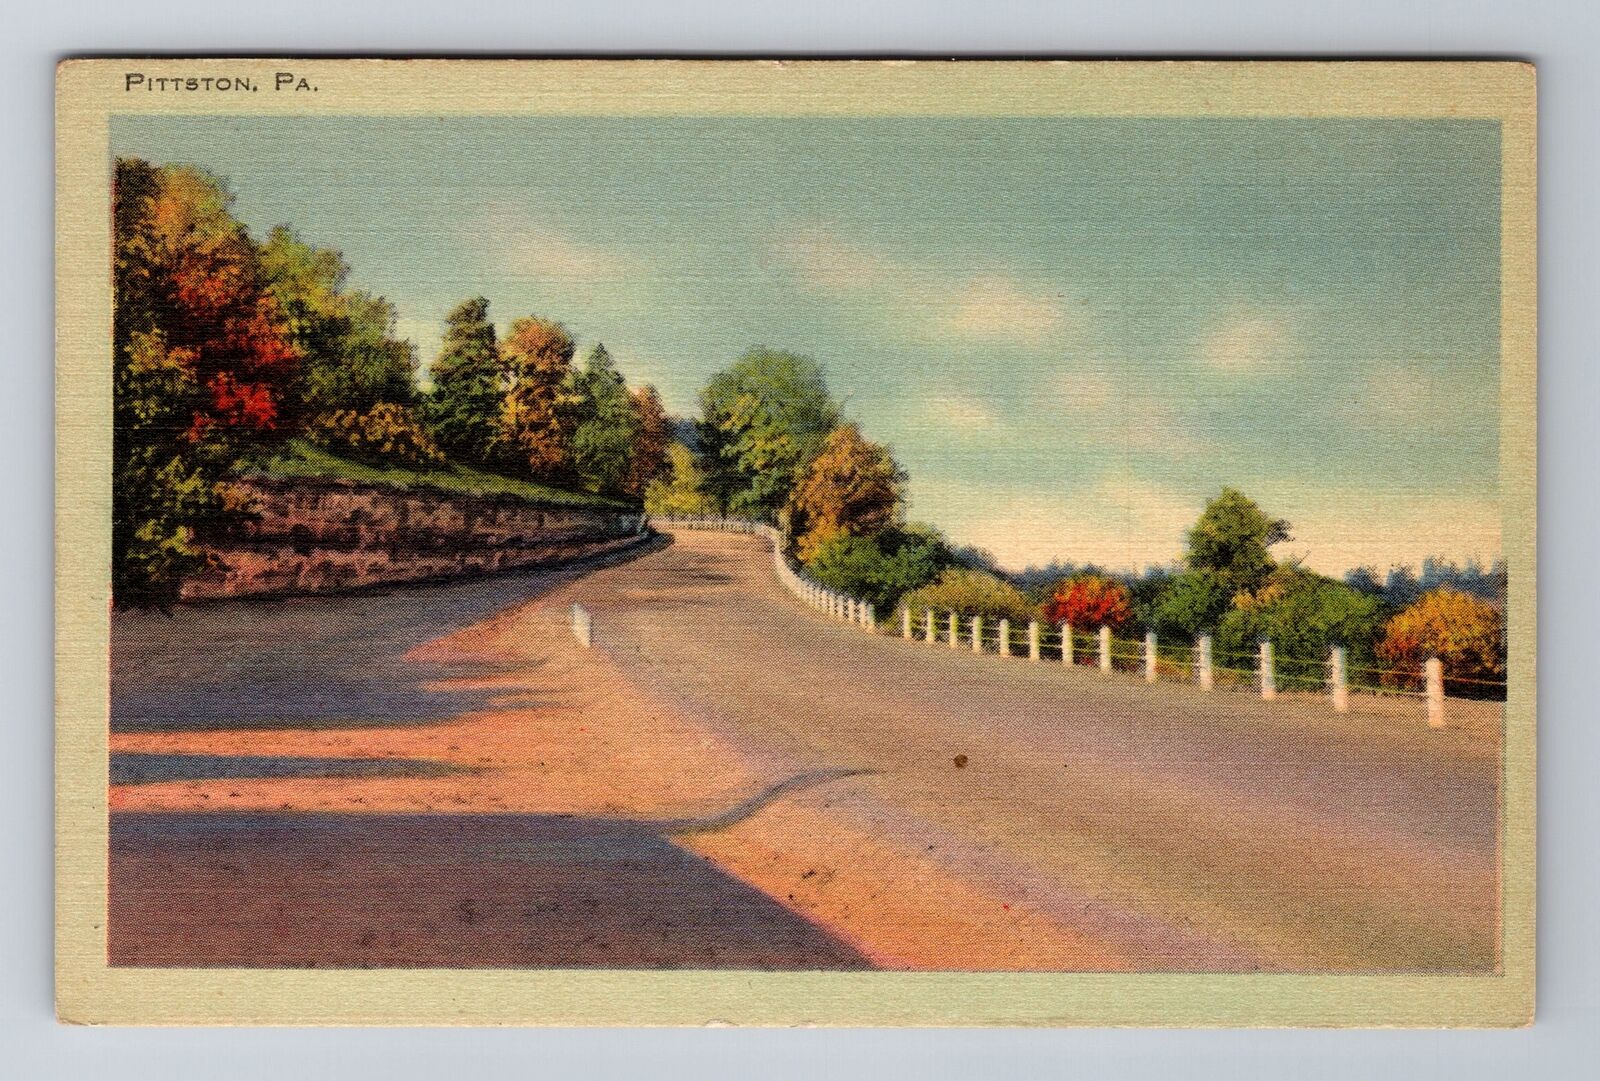 Pittston PA-Pennsylvania, Scenic Highway Road, Antique Souvenir Vintage Postcard